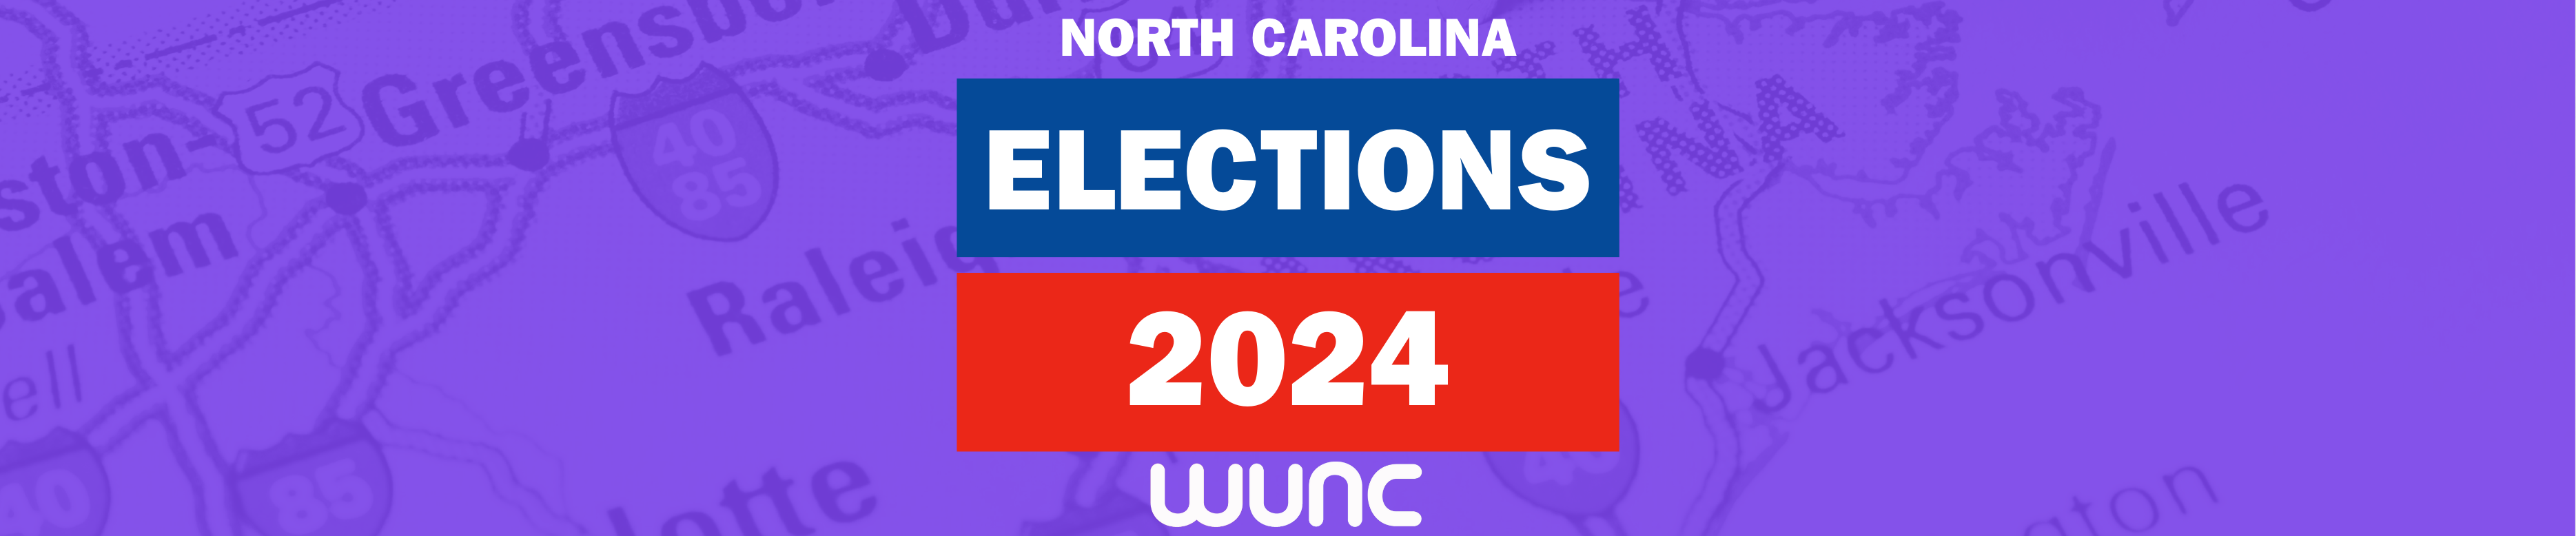 North Carolina Elections 2024